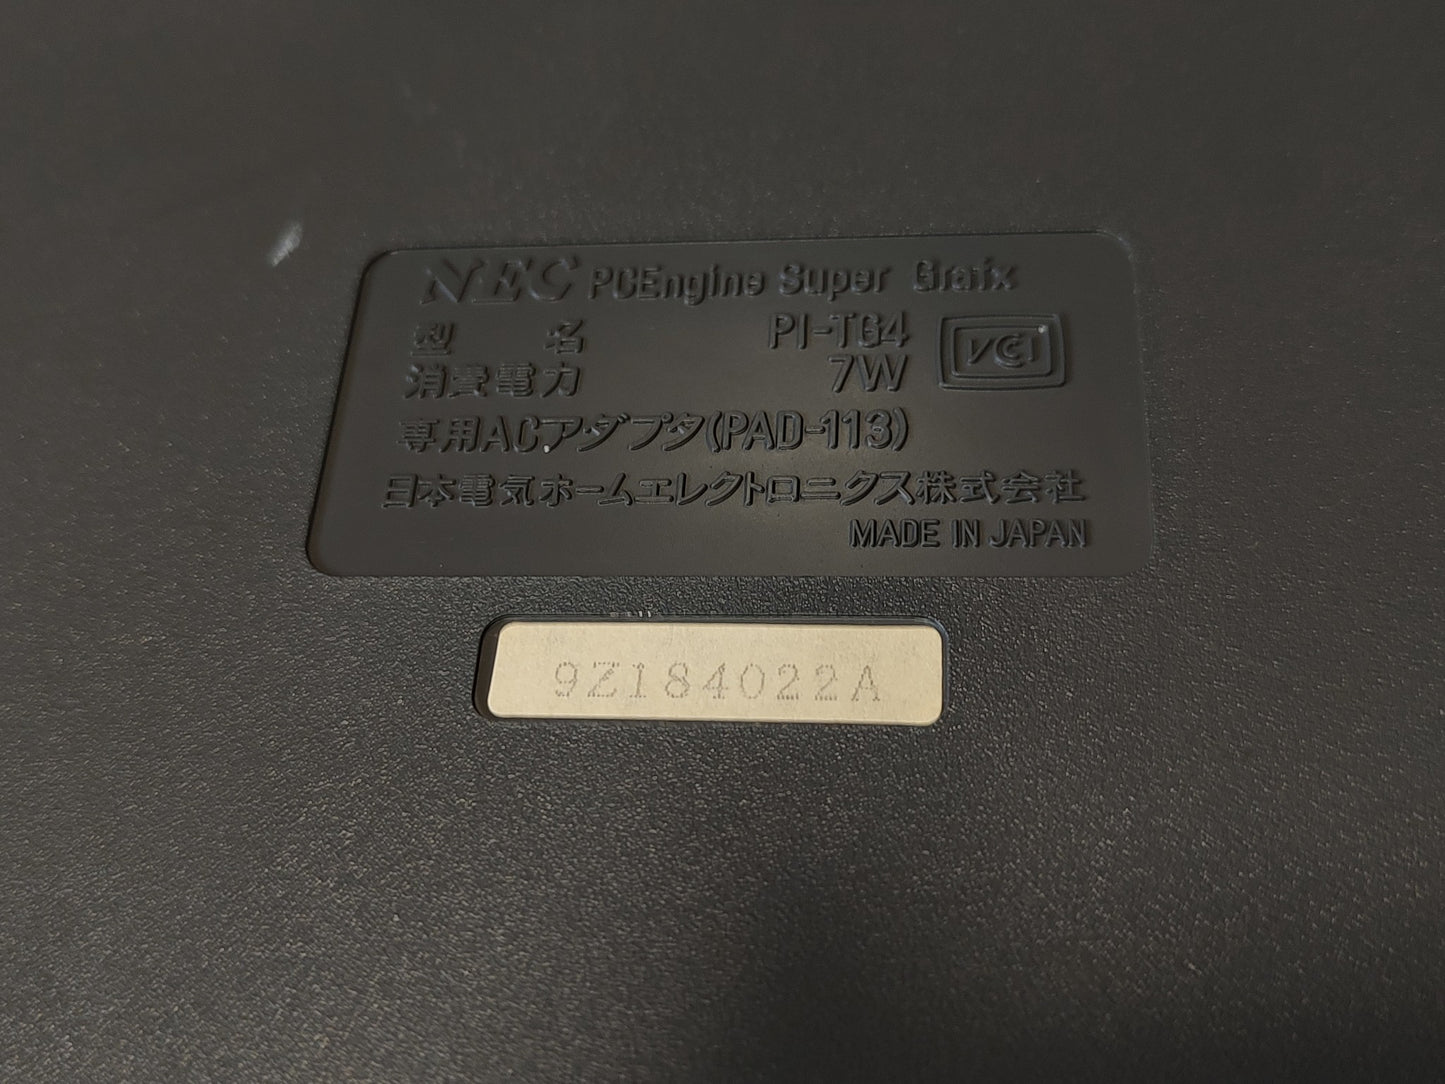 NEC PC Engine SuperGrafx TurboGrafx-16 PI-TG4 Console and Pad set, working-f0719